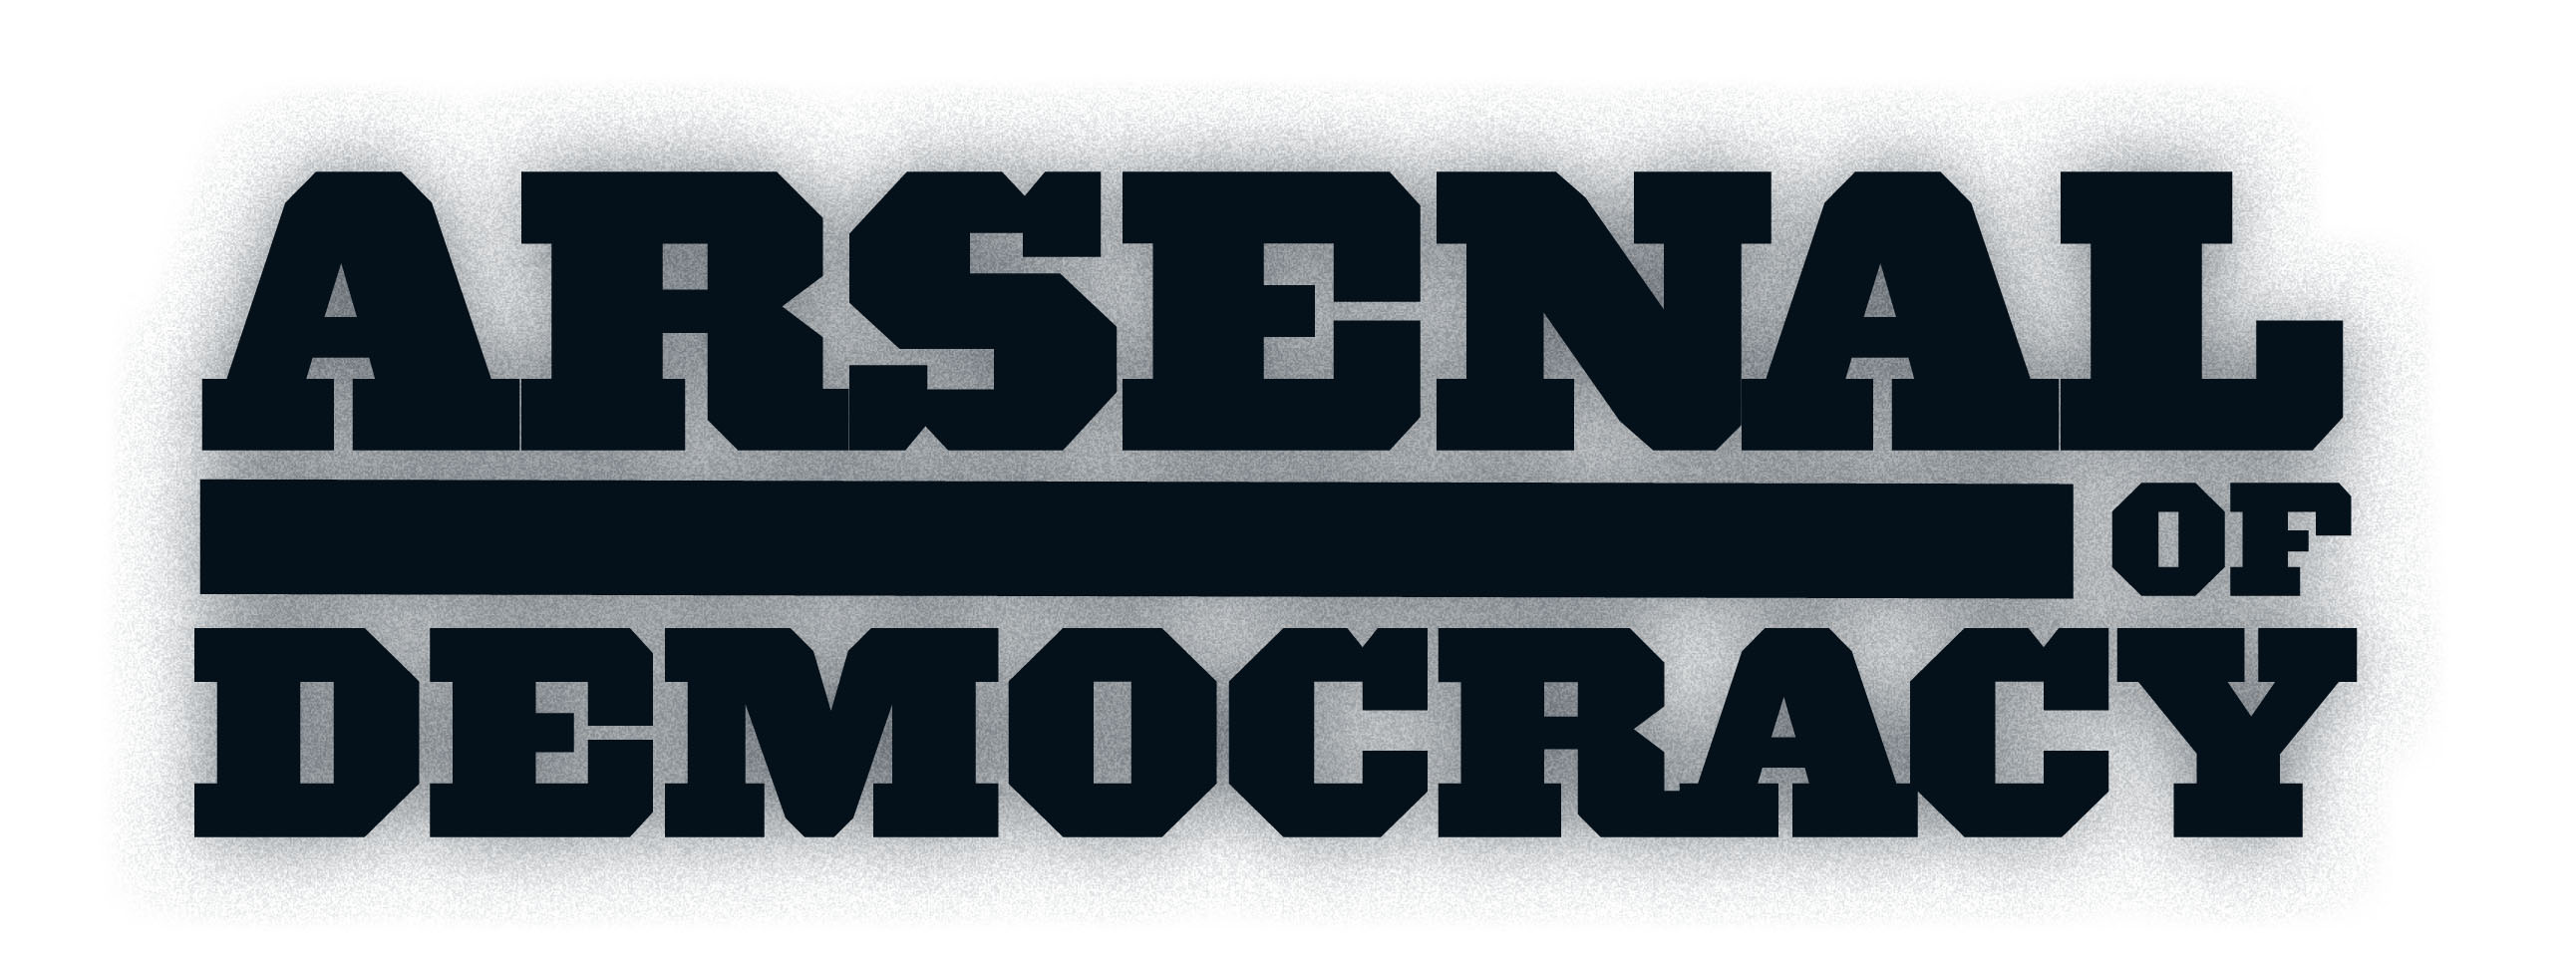 Арсенал демократии. Arsenal of Democracy. Arsenal of Democracy: a Hearts of Iron game. Arsenal of Democracy (Video game). Демократия PNG.